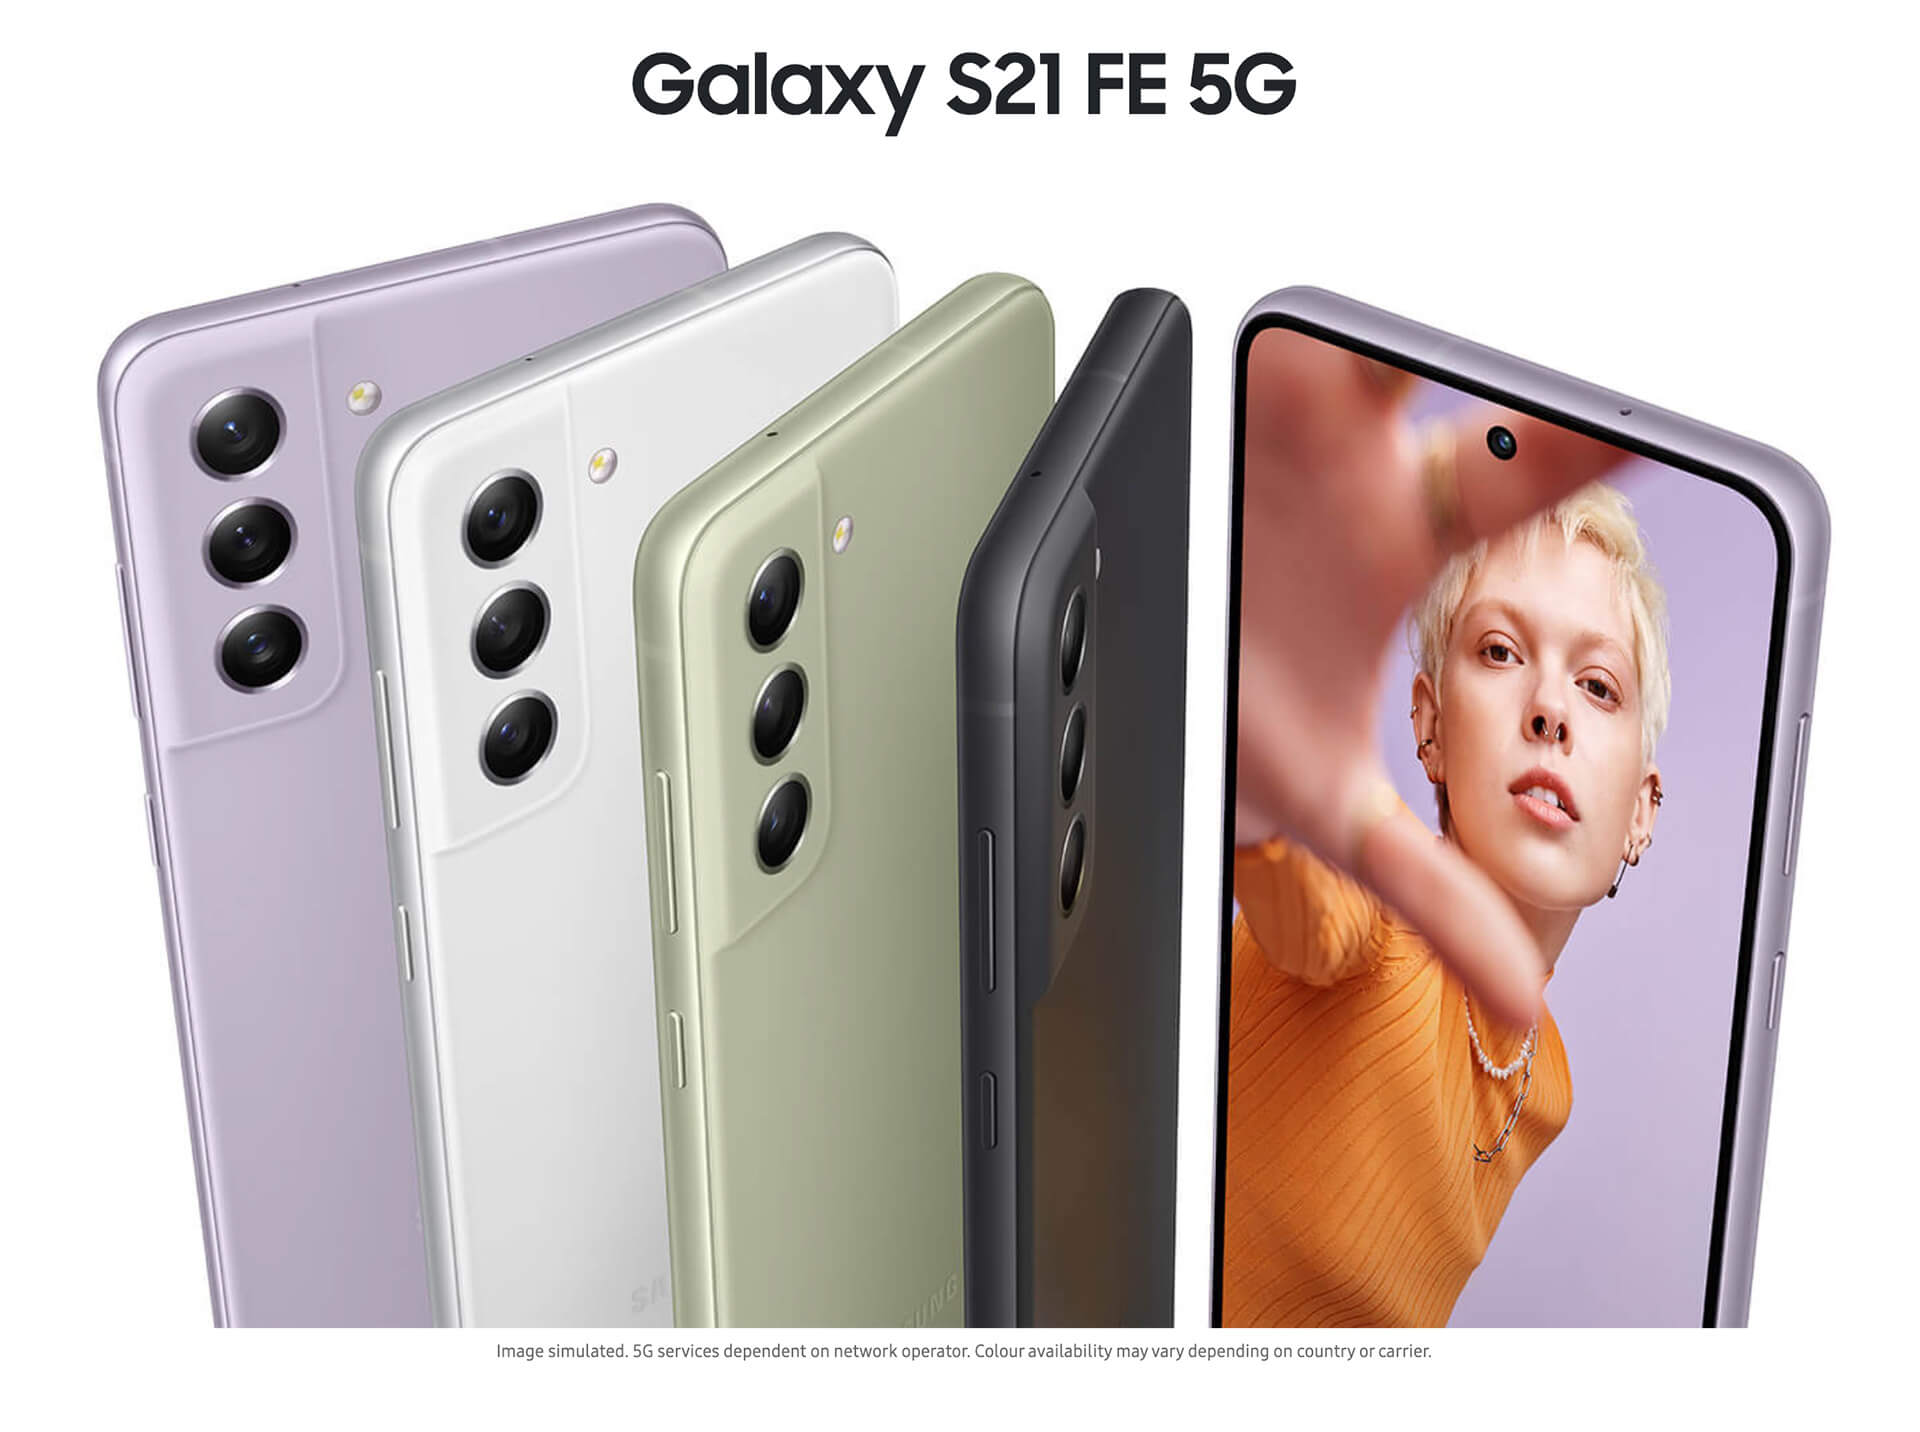 Galaxy S21 FE 5G phones